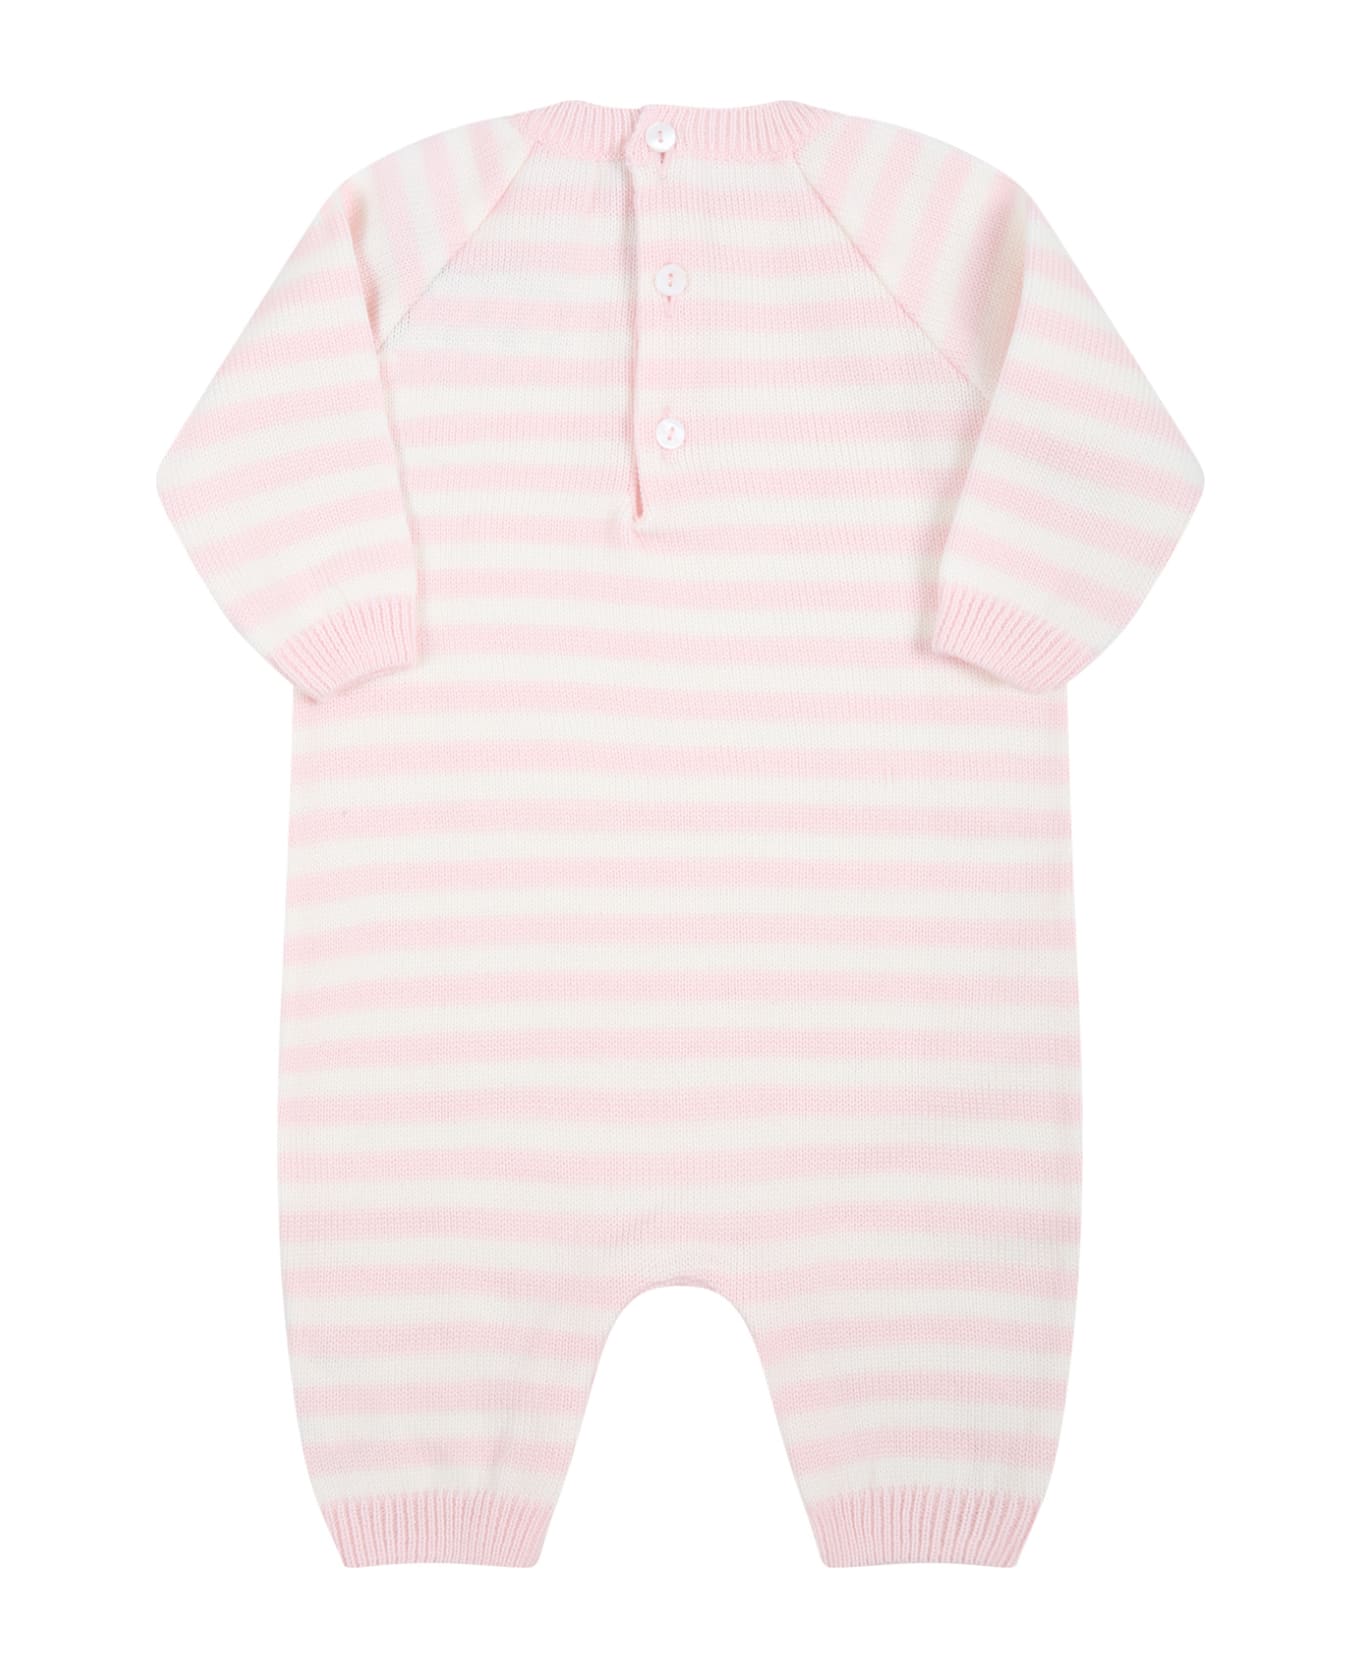 Little Bear Multicolor Babygrow For Baby Girl - Pink